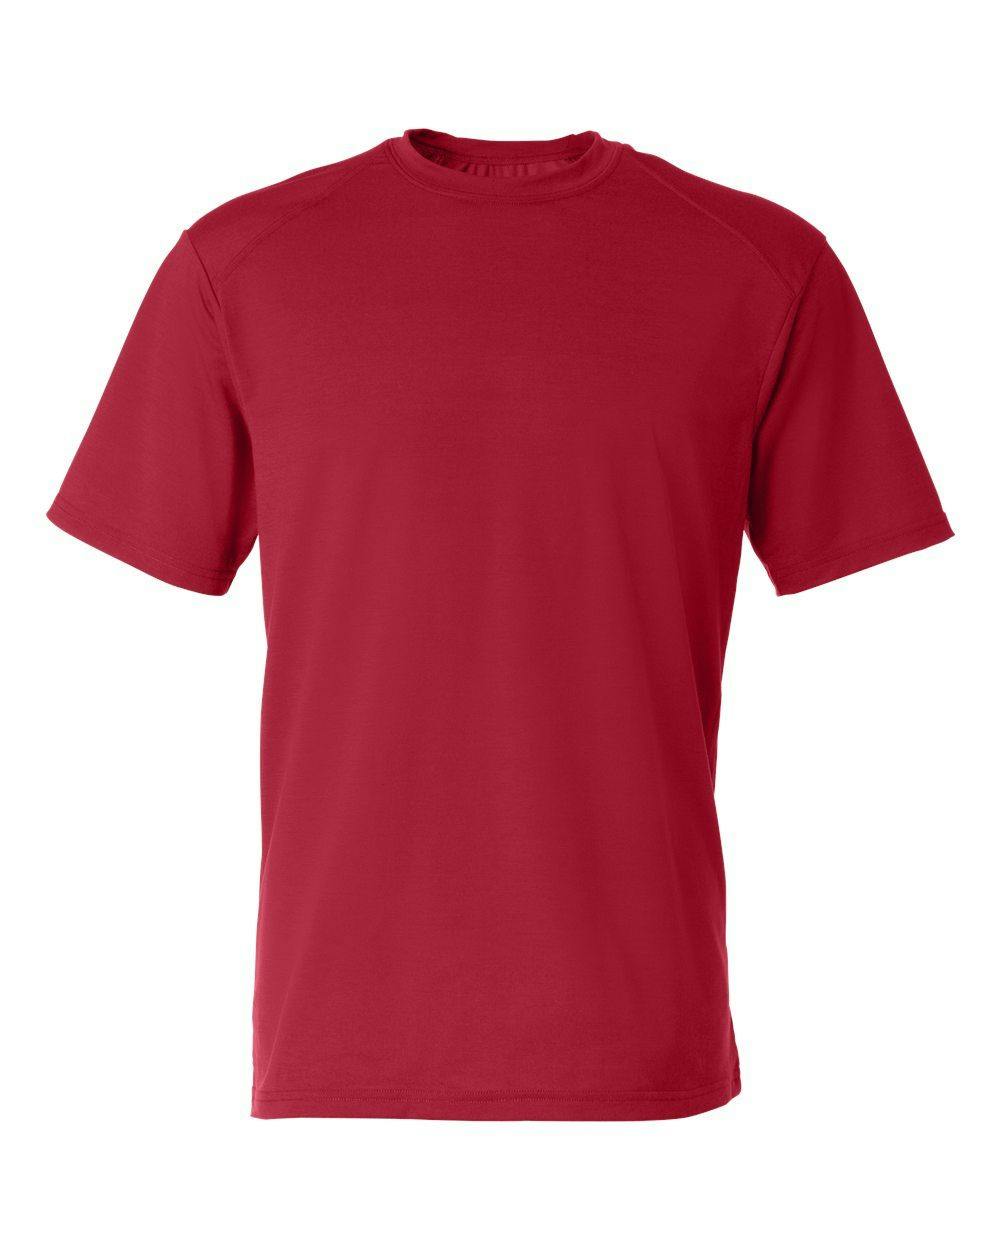 Image for B-Tech Cotton-Feel T-Shirt - 4820